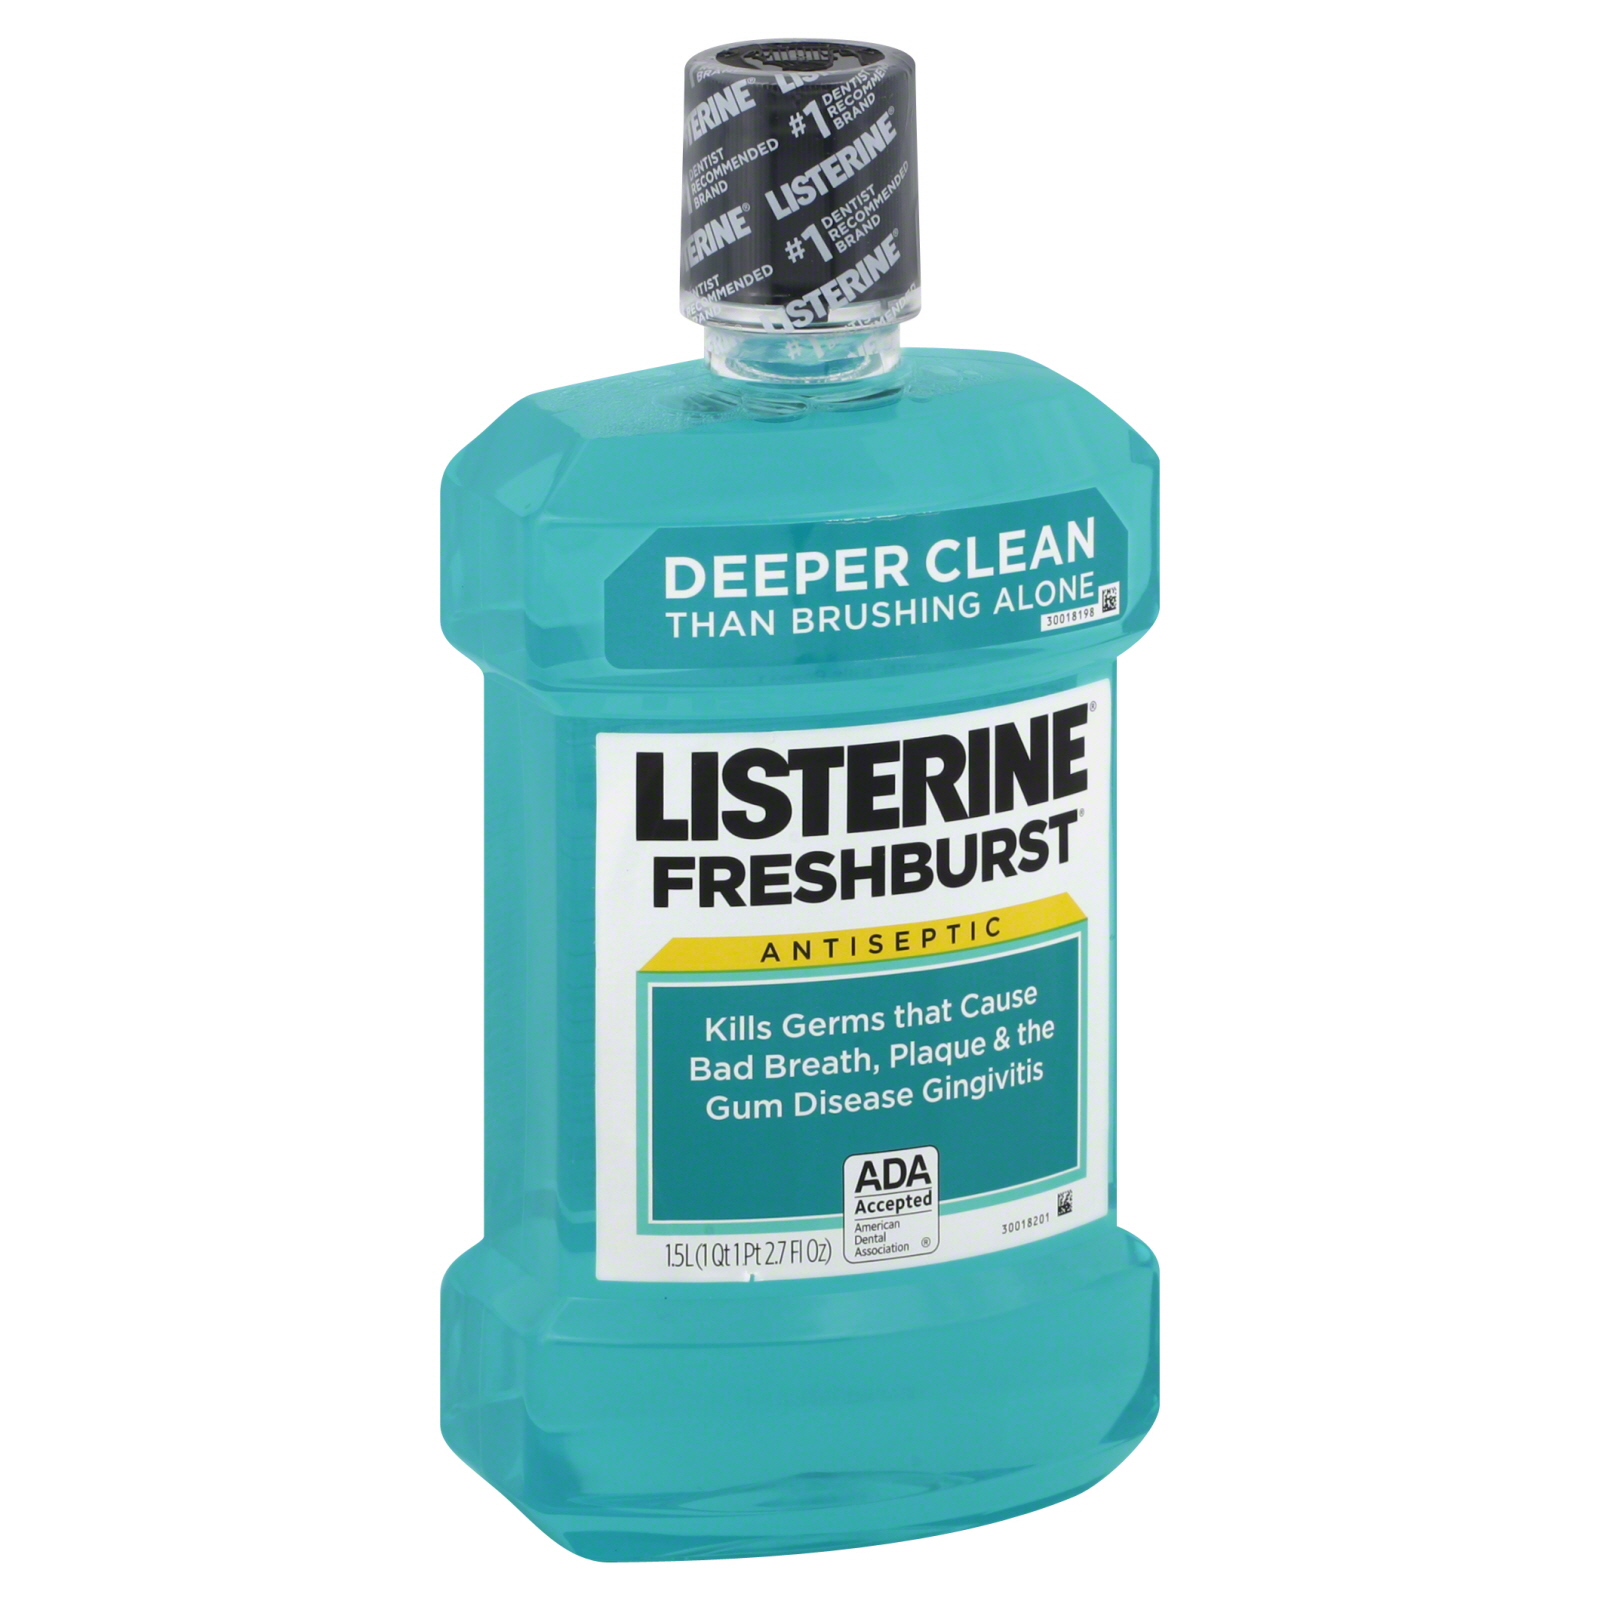 Listerine  Freshburst Antiseptic Mouthwash for Bad Breath, 1.5 L